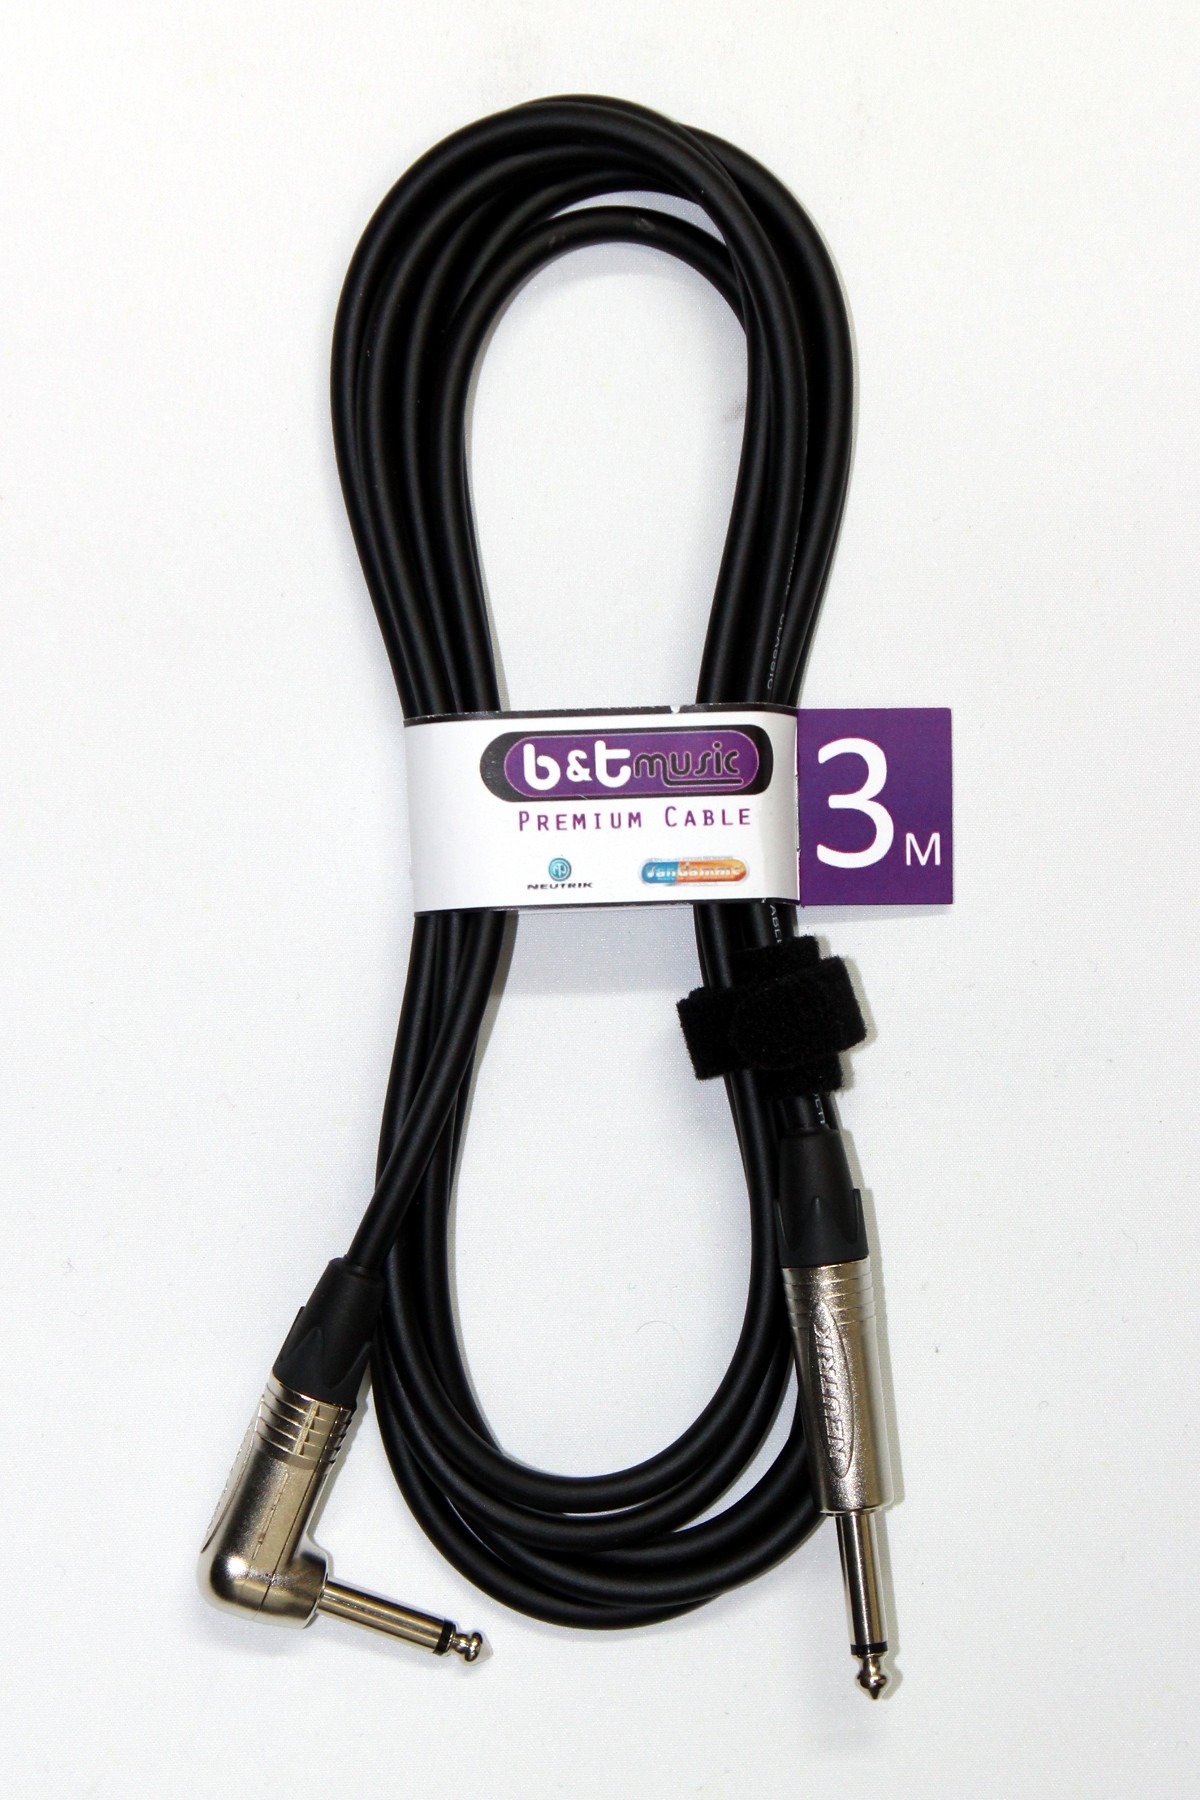 B&T Music Premium Cable 3m Jack To Angle Jack - Black